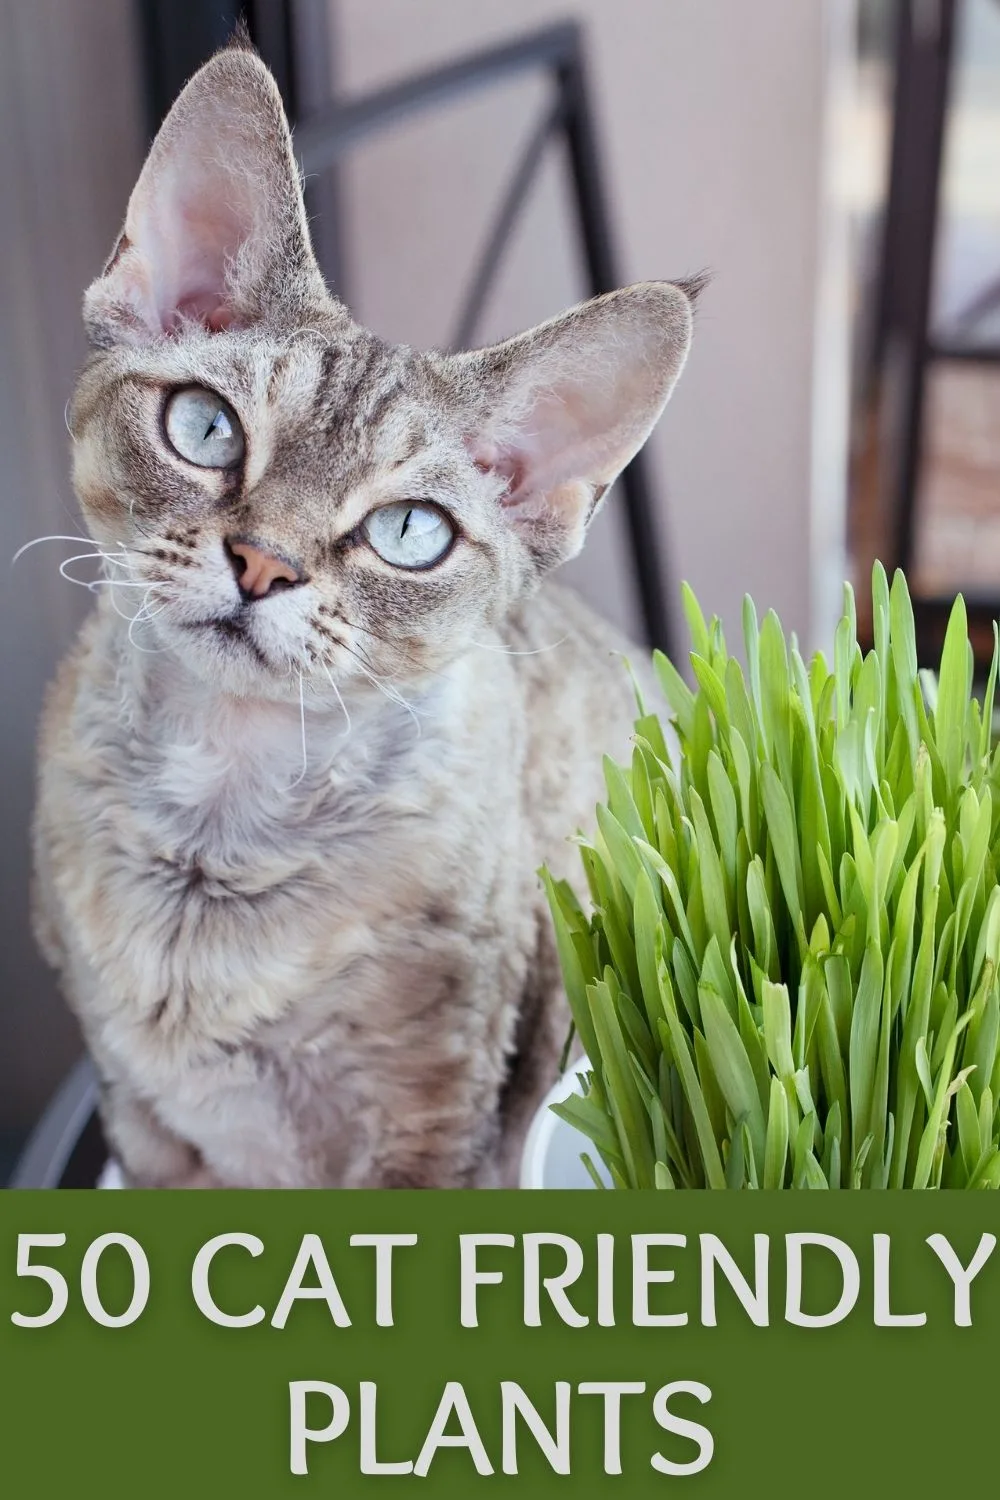 50 cat friendly plants